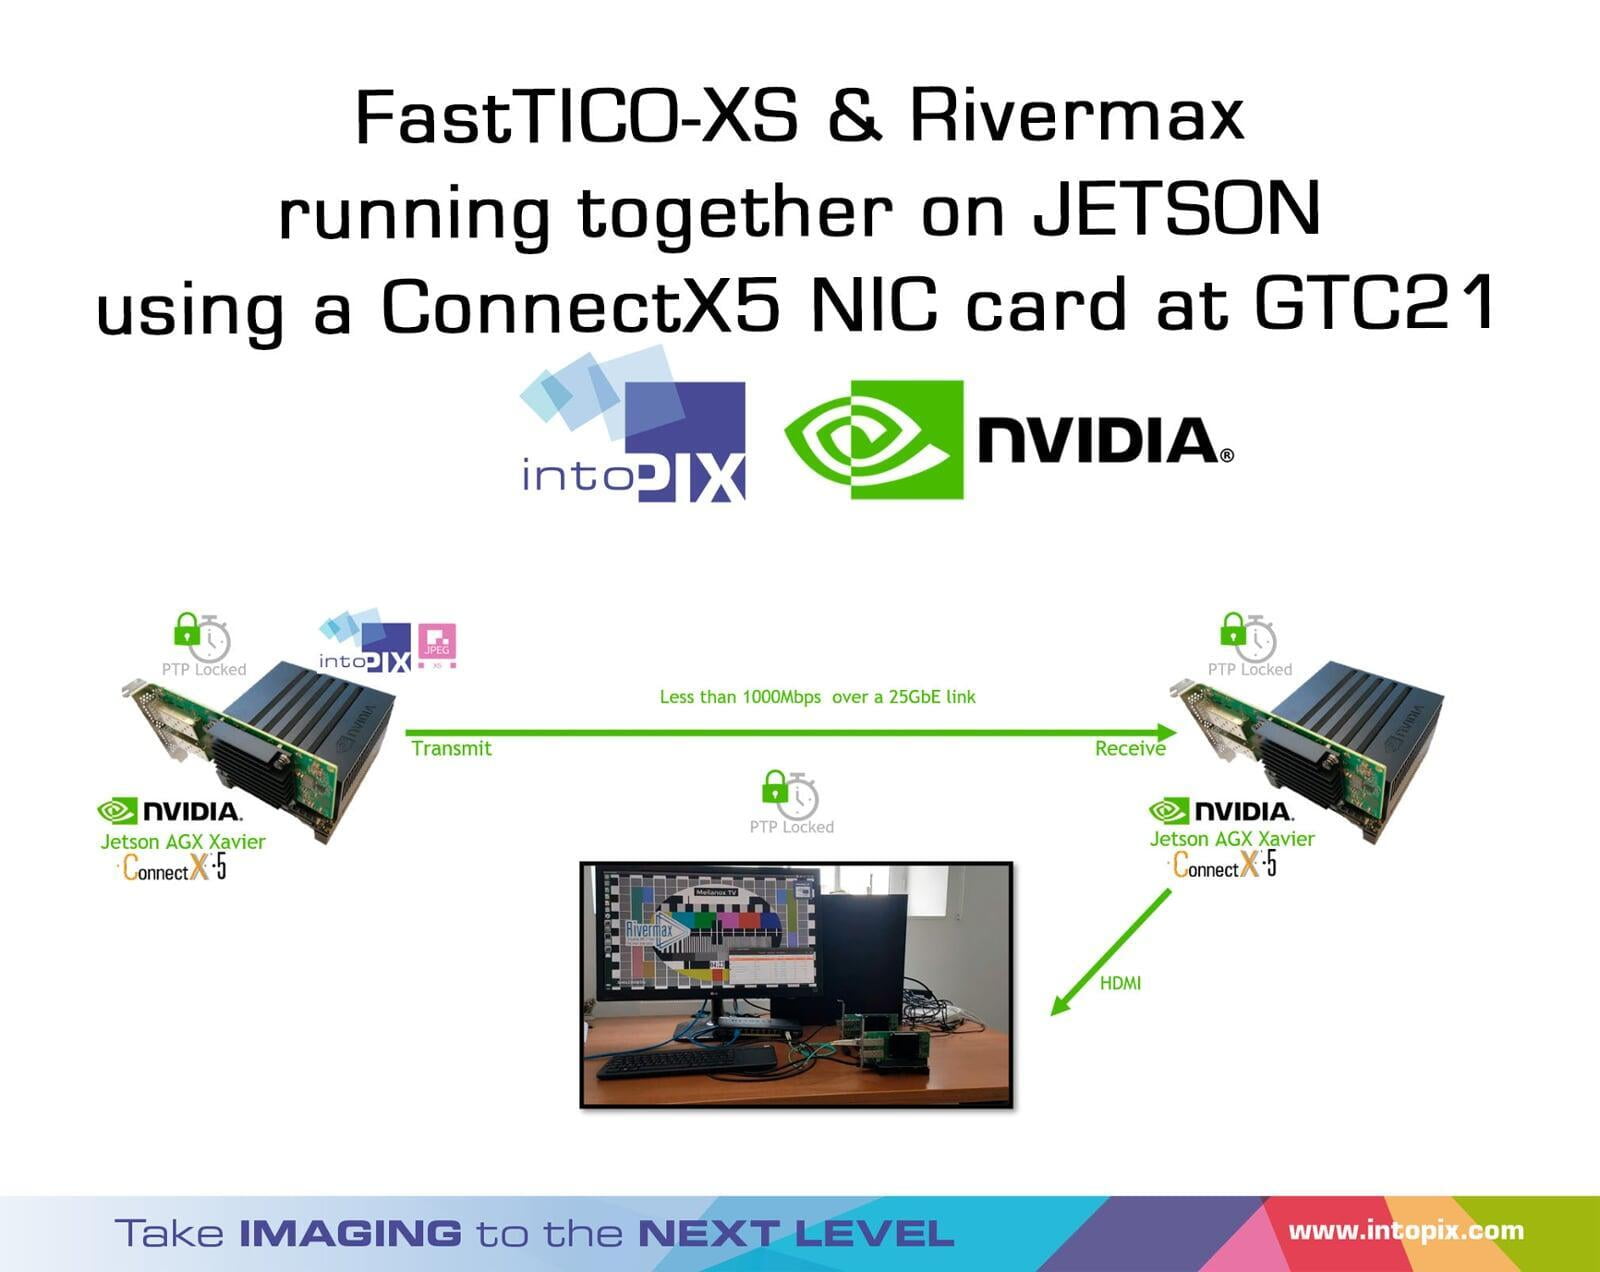 FastTicoXS & Rivermax는 GTC21에서 ConnectX5 NIC 카드를 사용하여 JETSON에서 함께 실행됩니다.